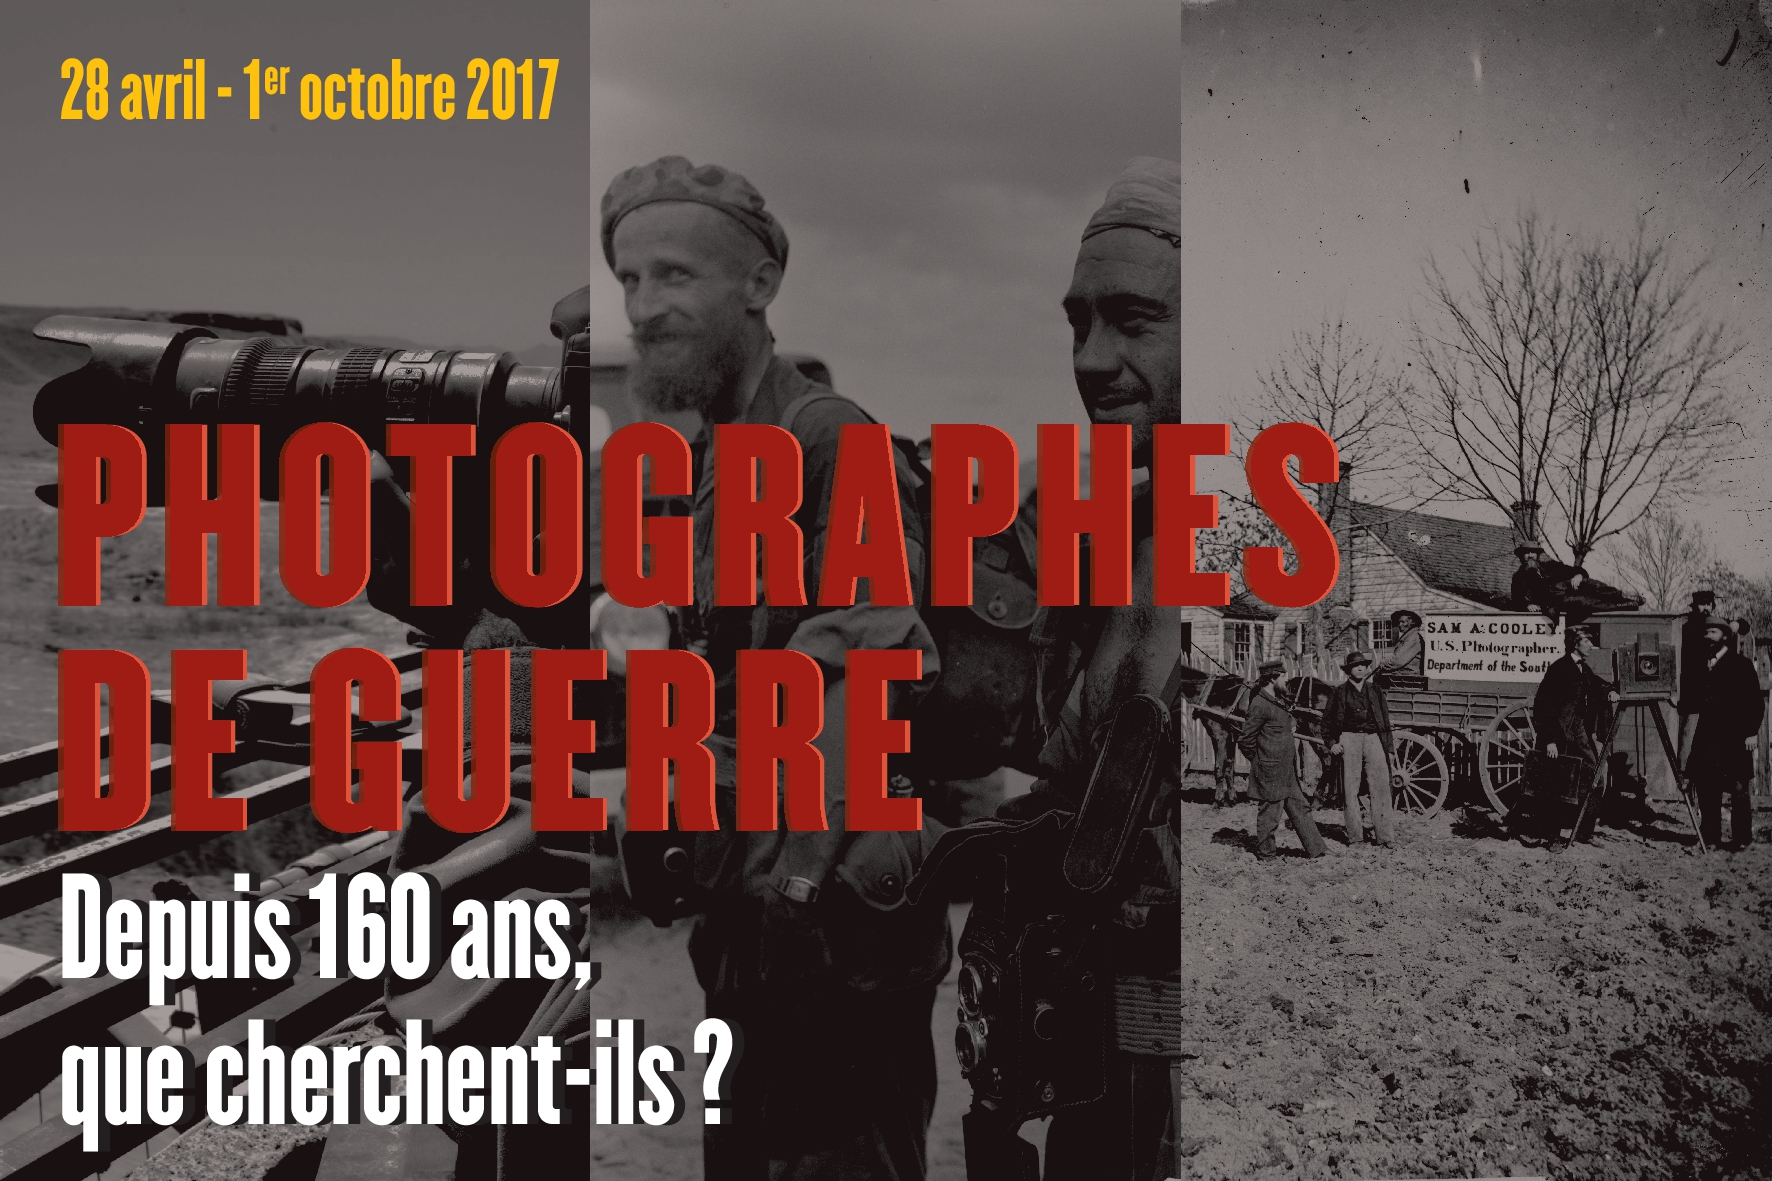 War photographers